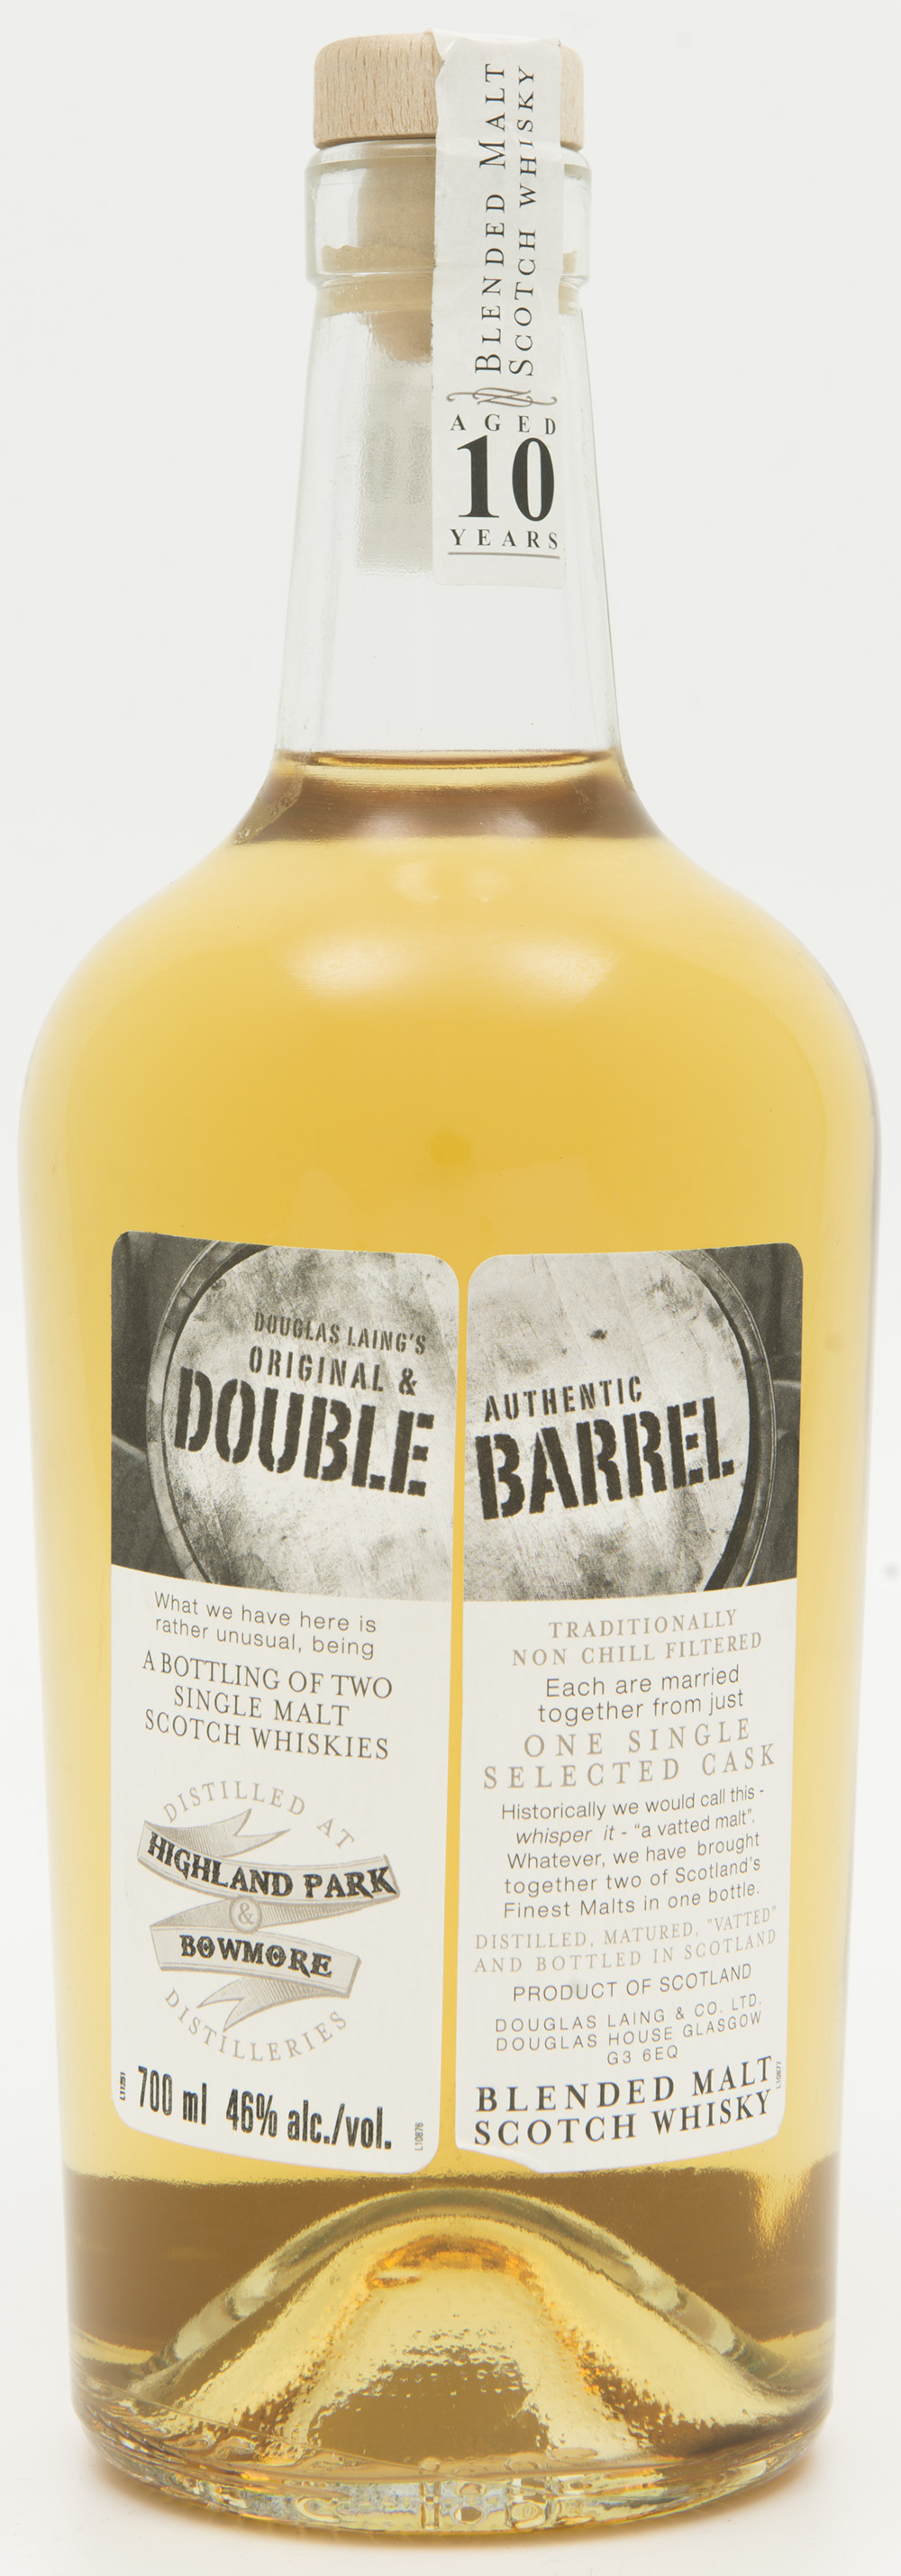 Billede: DSC_3675 Douglas Laing's Double Barrel - Highland Park and Bowmore - bottle.jpg